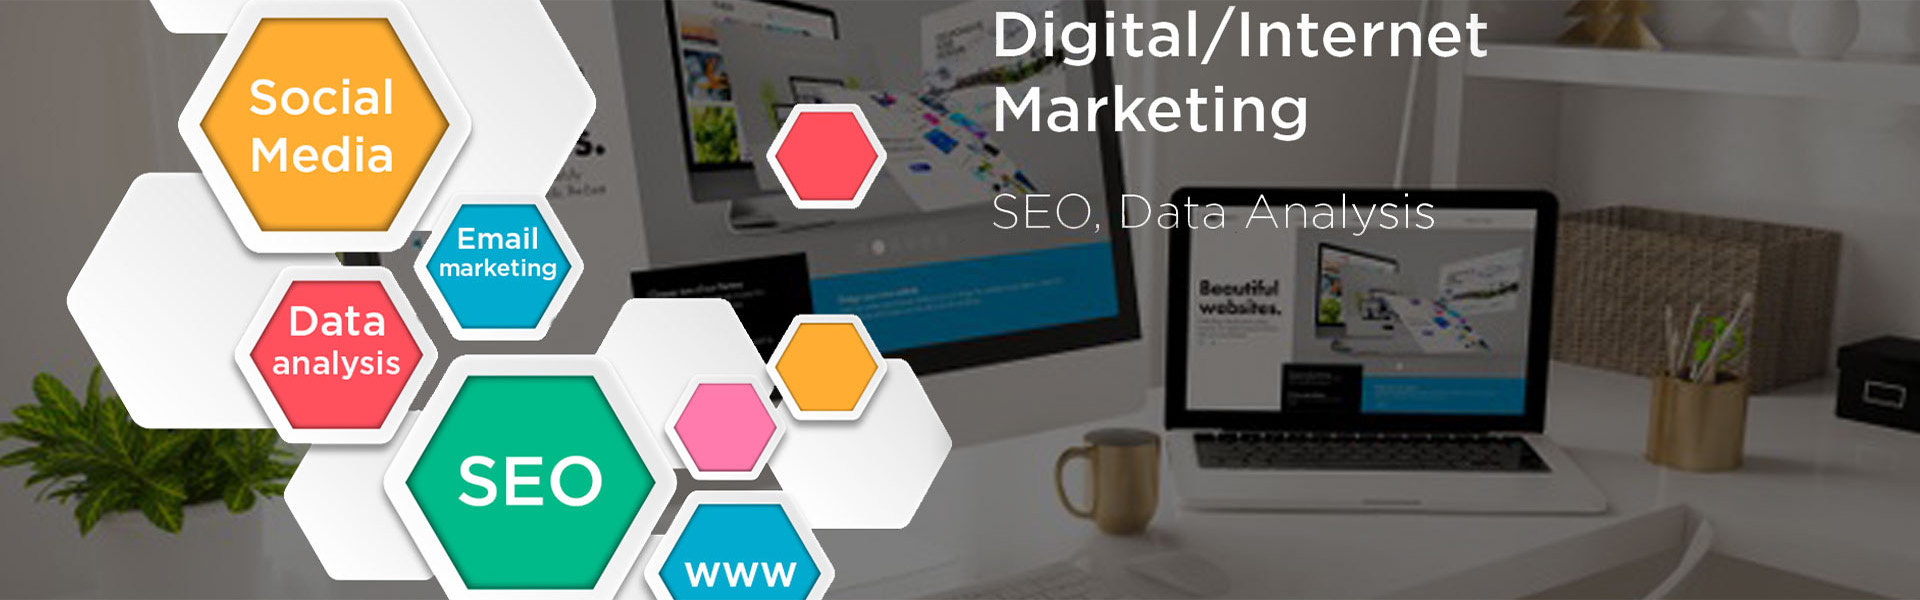 digital, internet marketing and seo